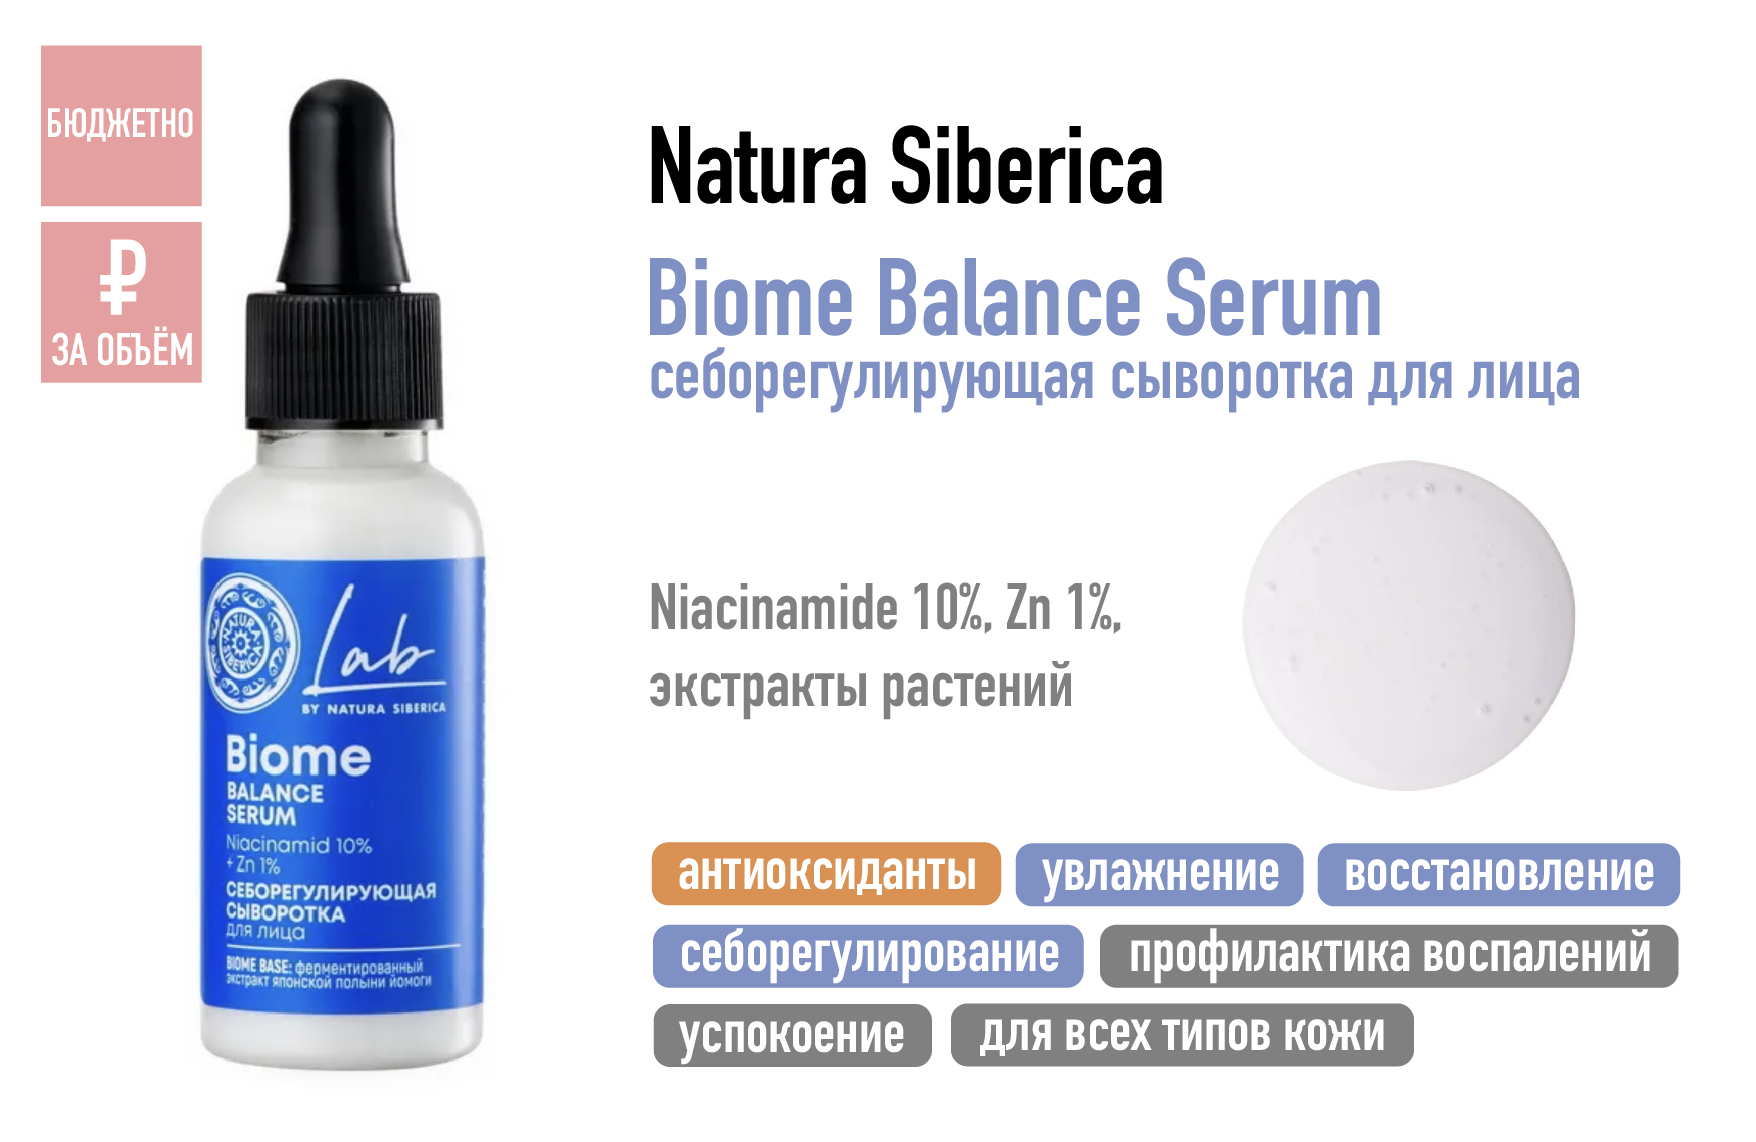 Nature Siberica LAB Biome Balance Serum / Себорегулирующая сыворотка для лица